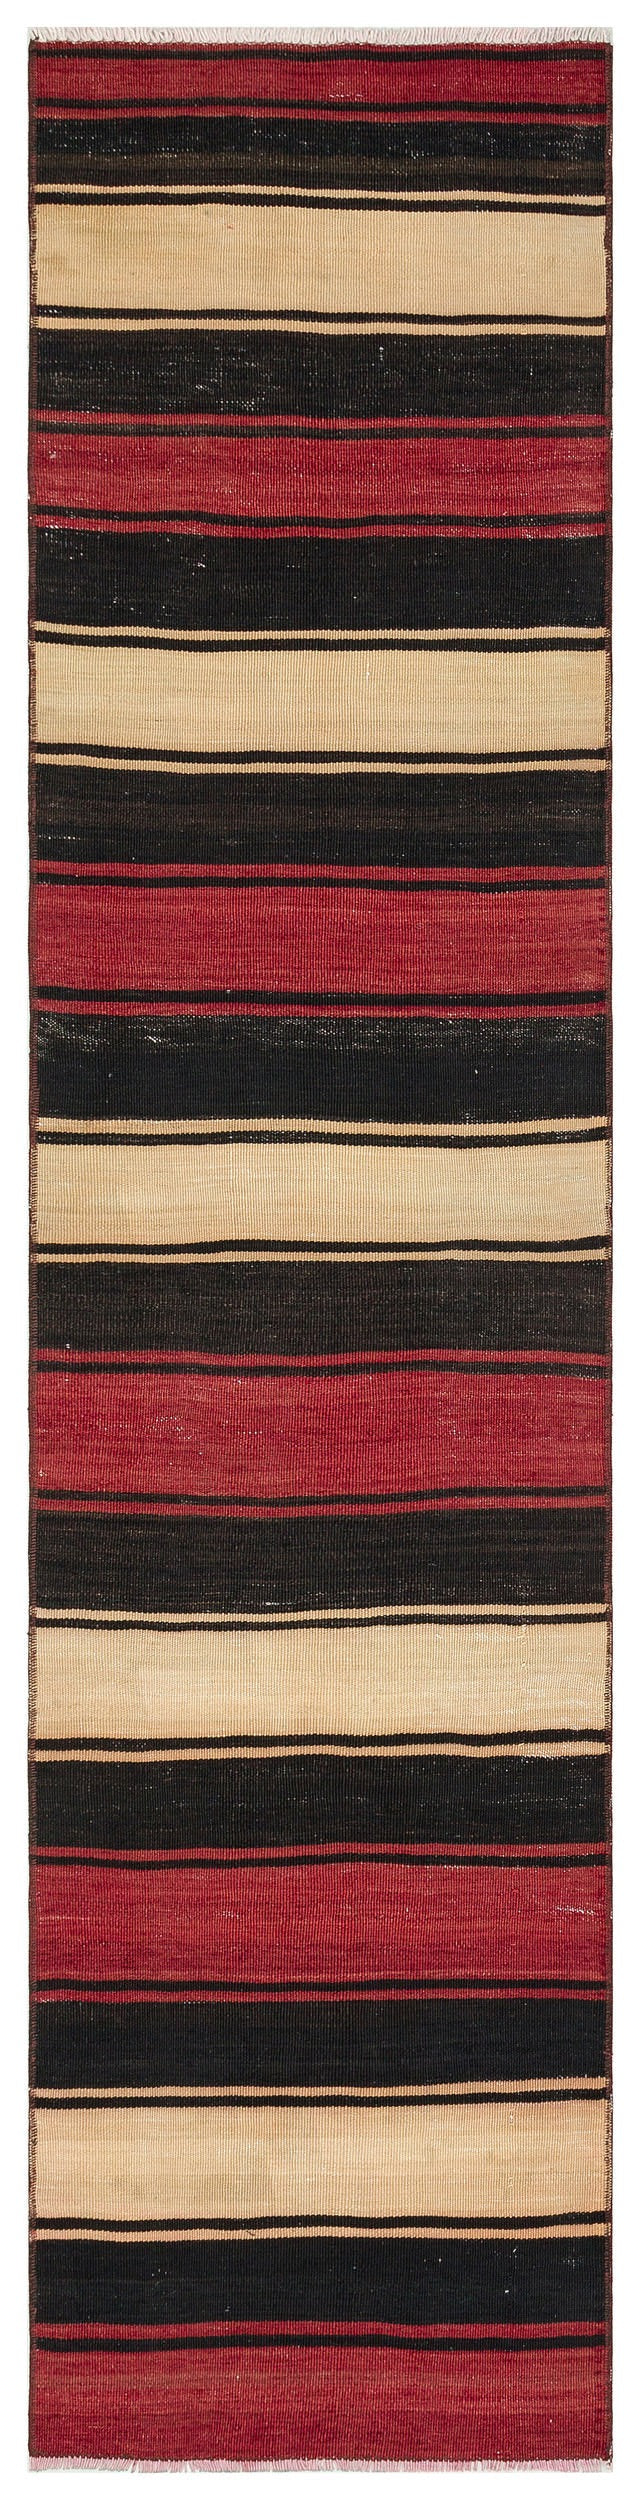 Crete Multi Striped Wool Hand Woven Carpet 056 x 225